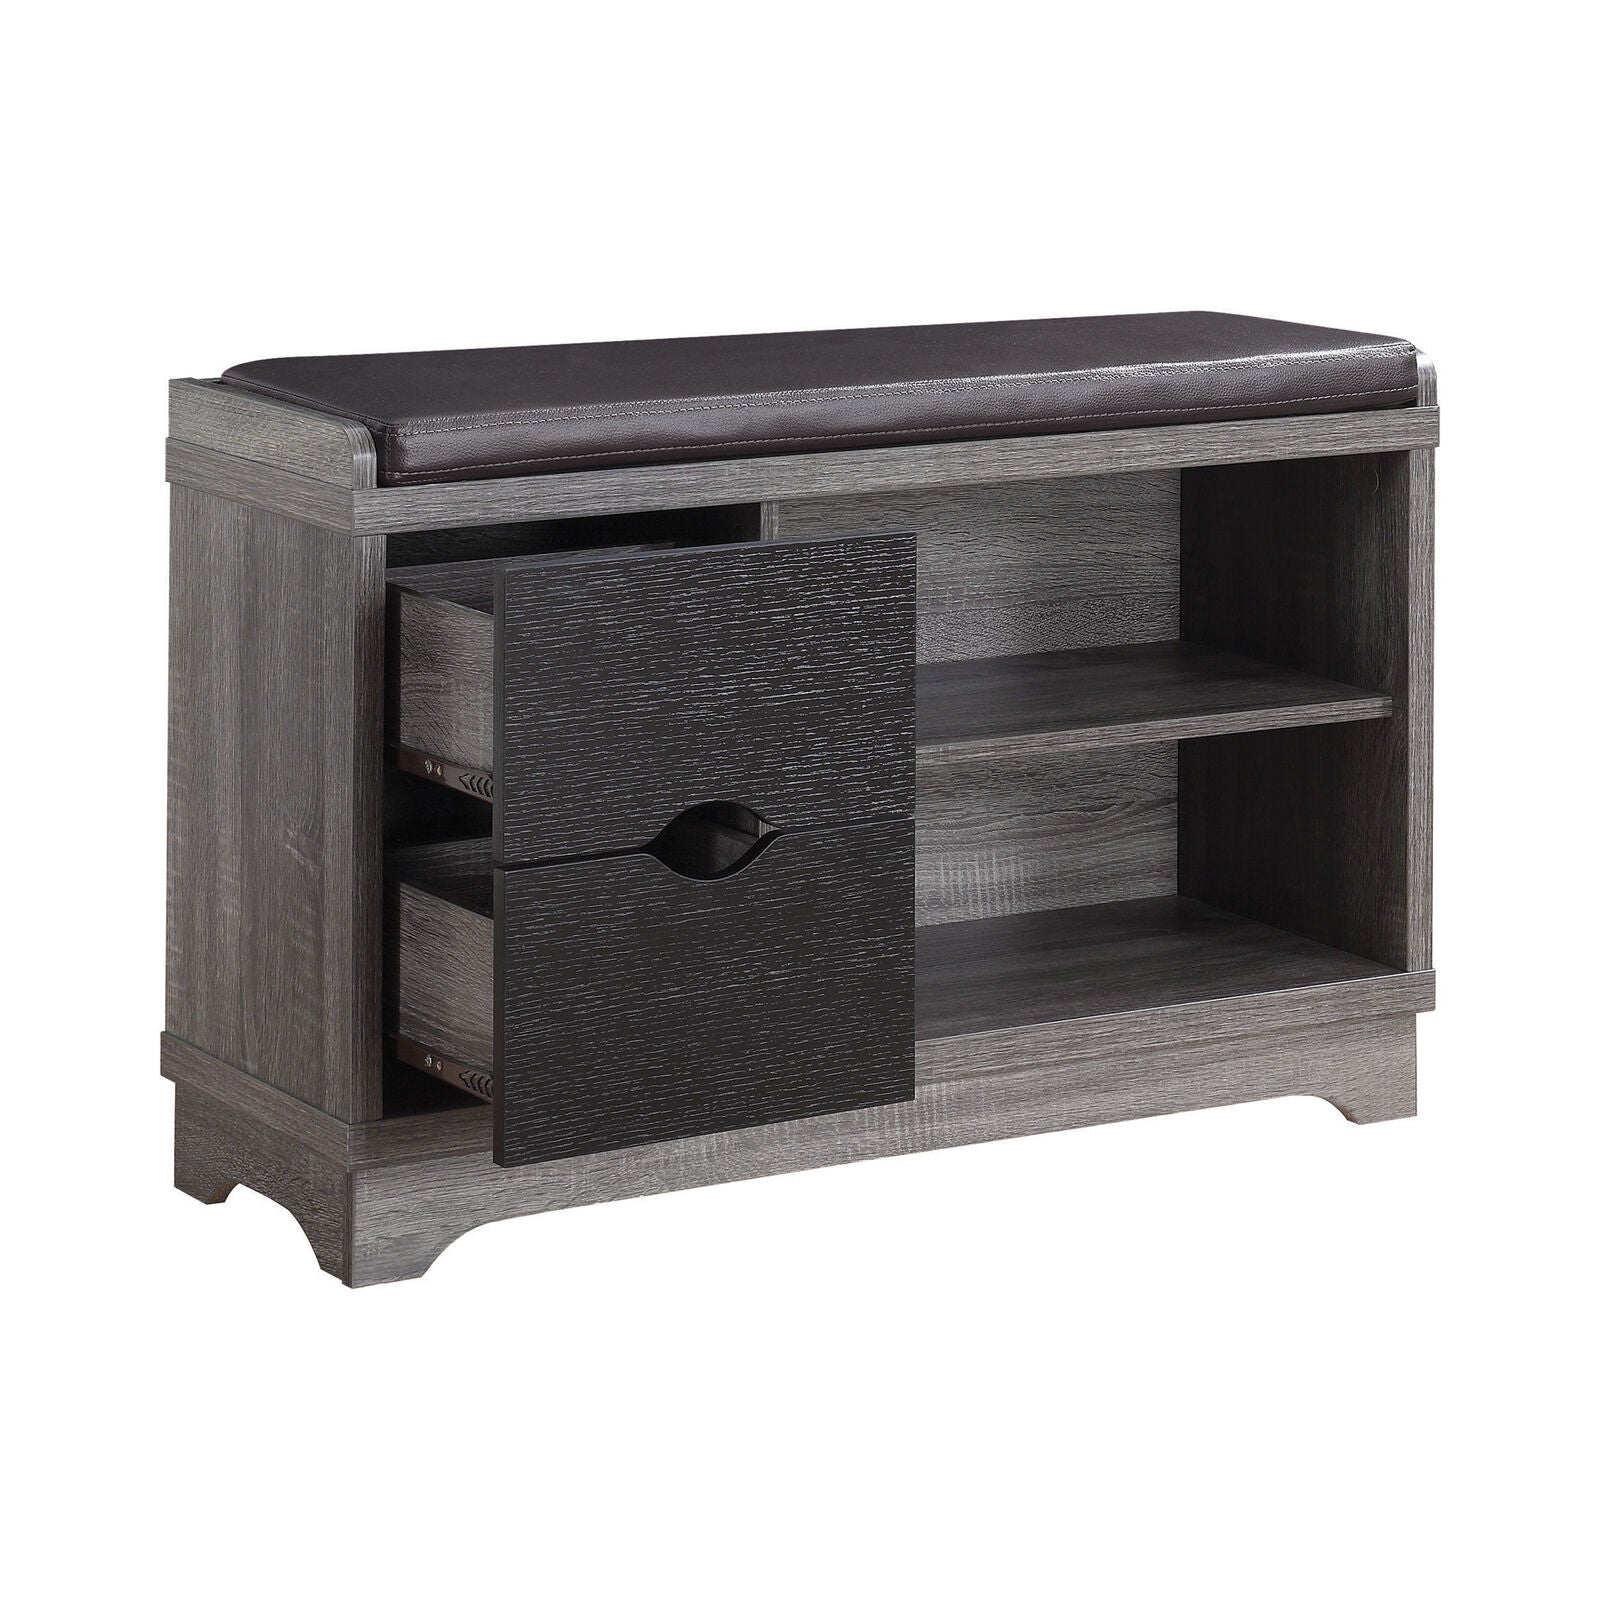 2-Drawer Storage Bench Rack Cabinet Distressed Grey And Black